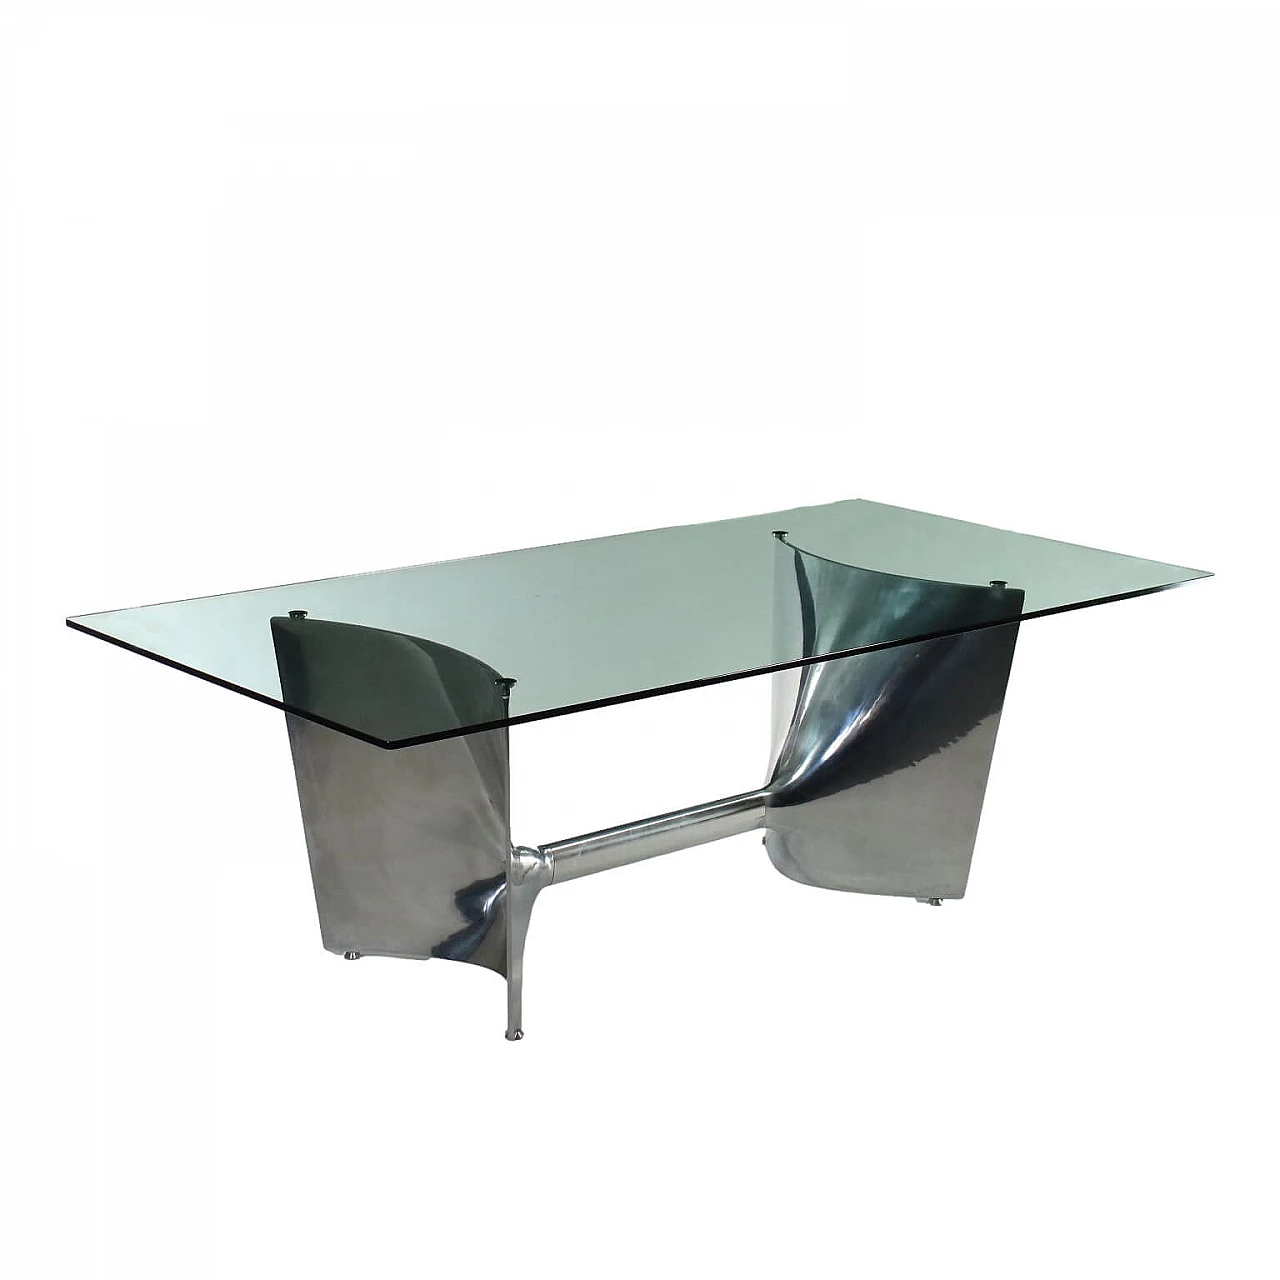 Fratino table in chromed aluminium and glass by Jeff Miller for Baleri, 2000 1258026